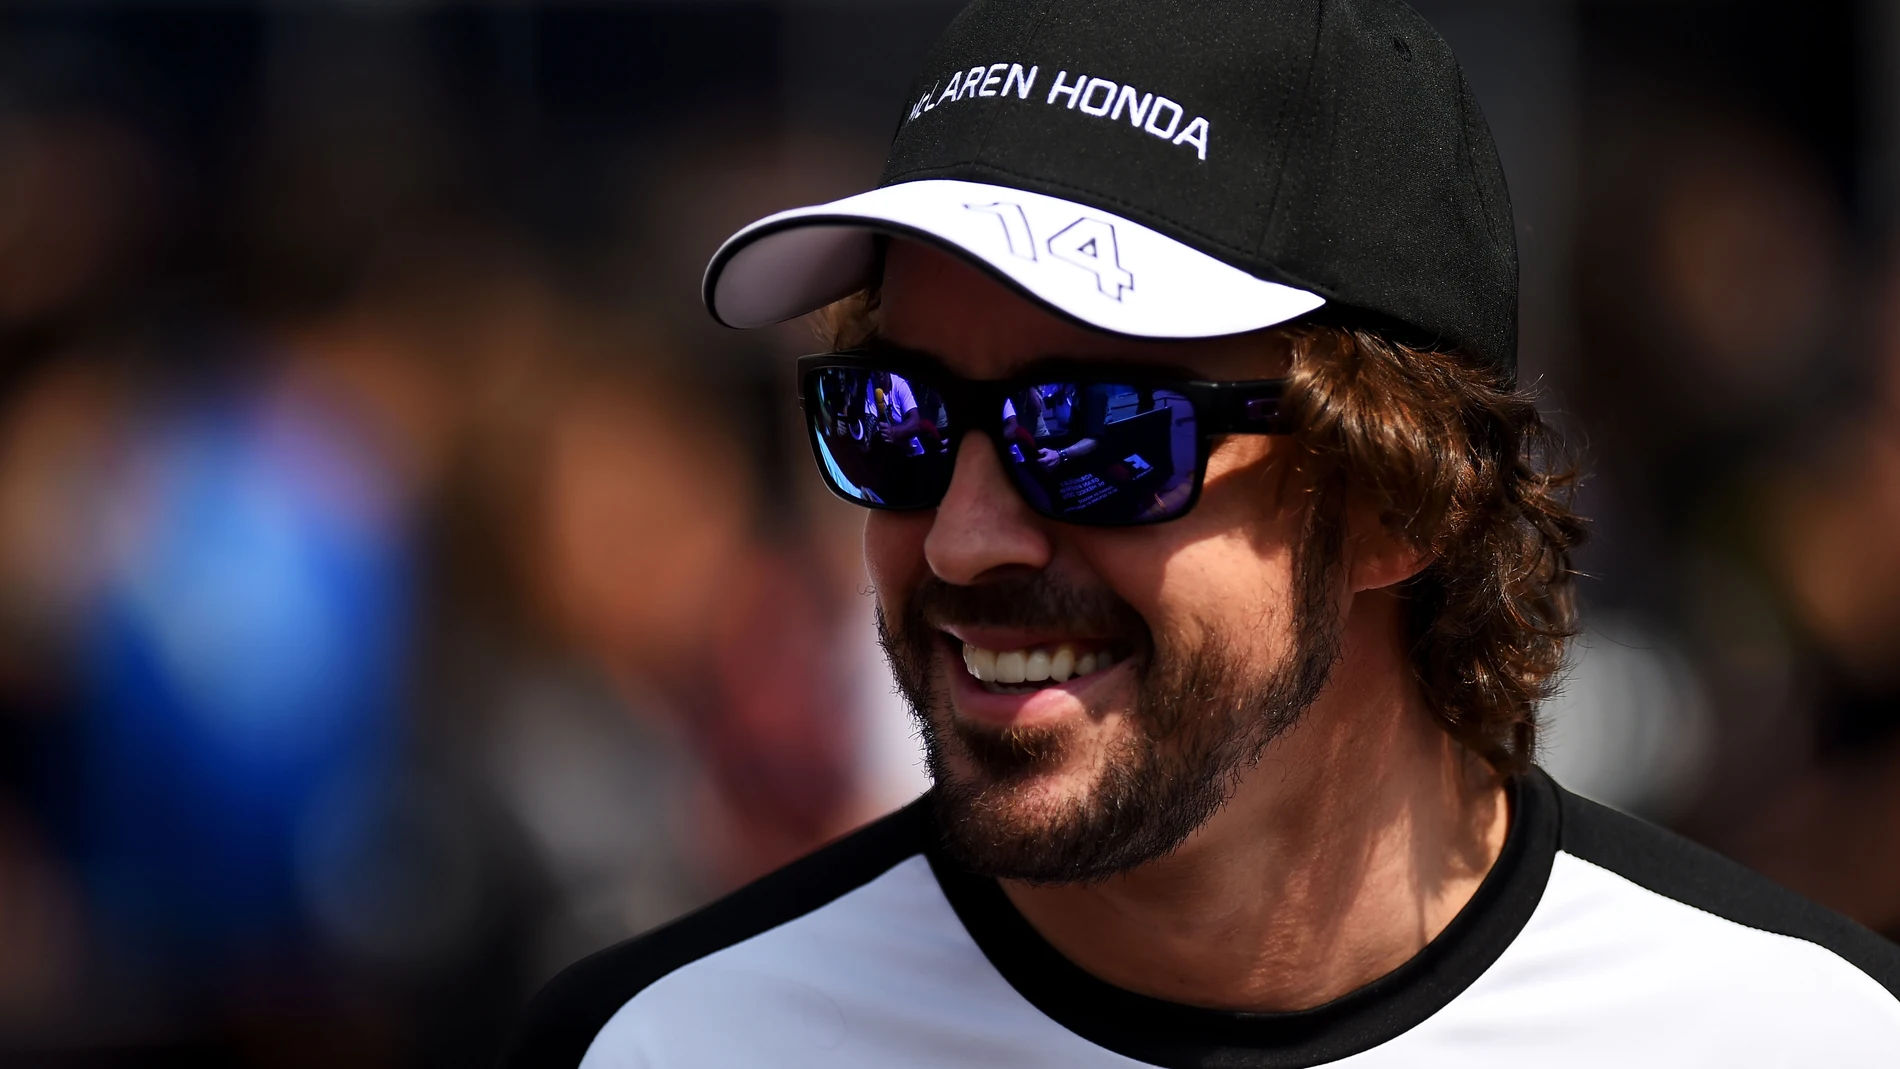 Fernando Alonso, piloto de McLaren Honda